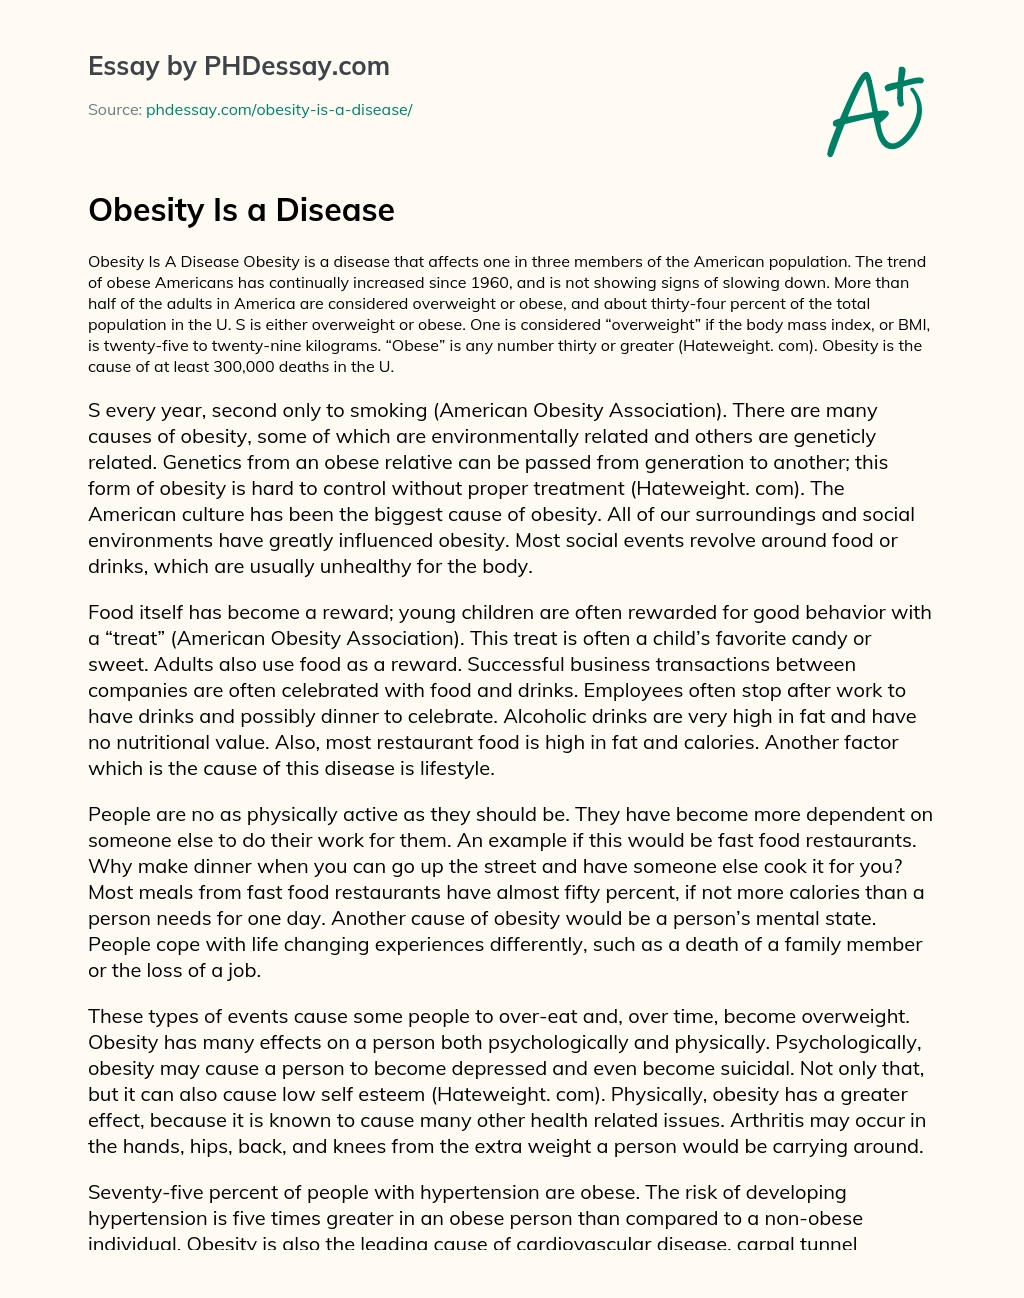 Obesity Is a Disease essay